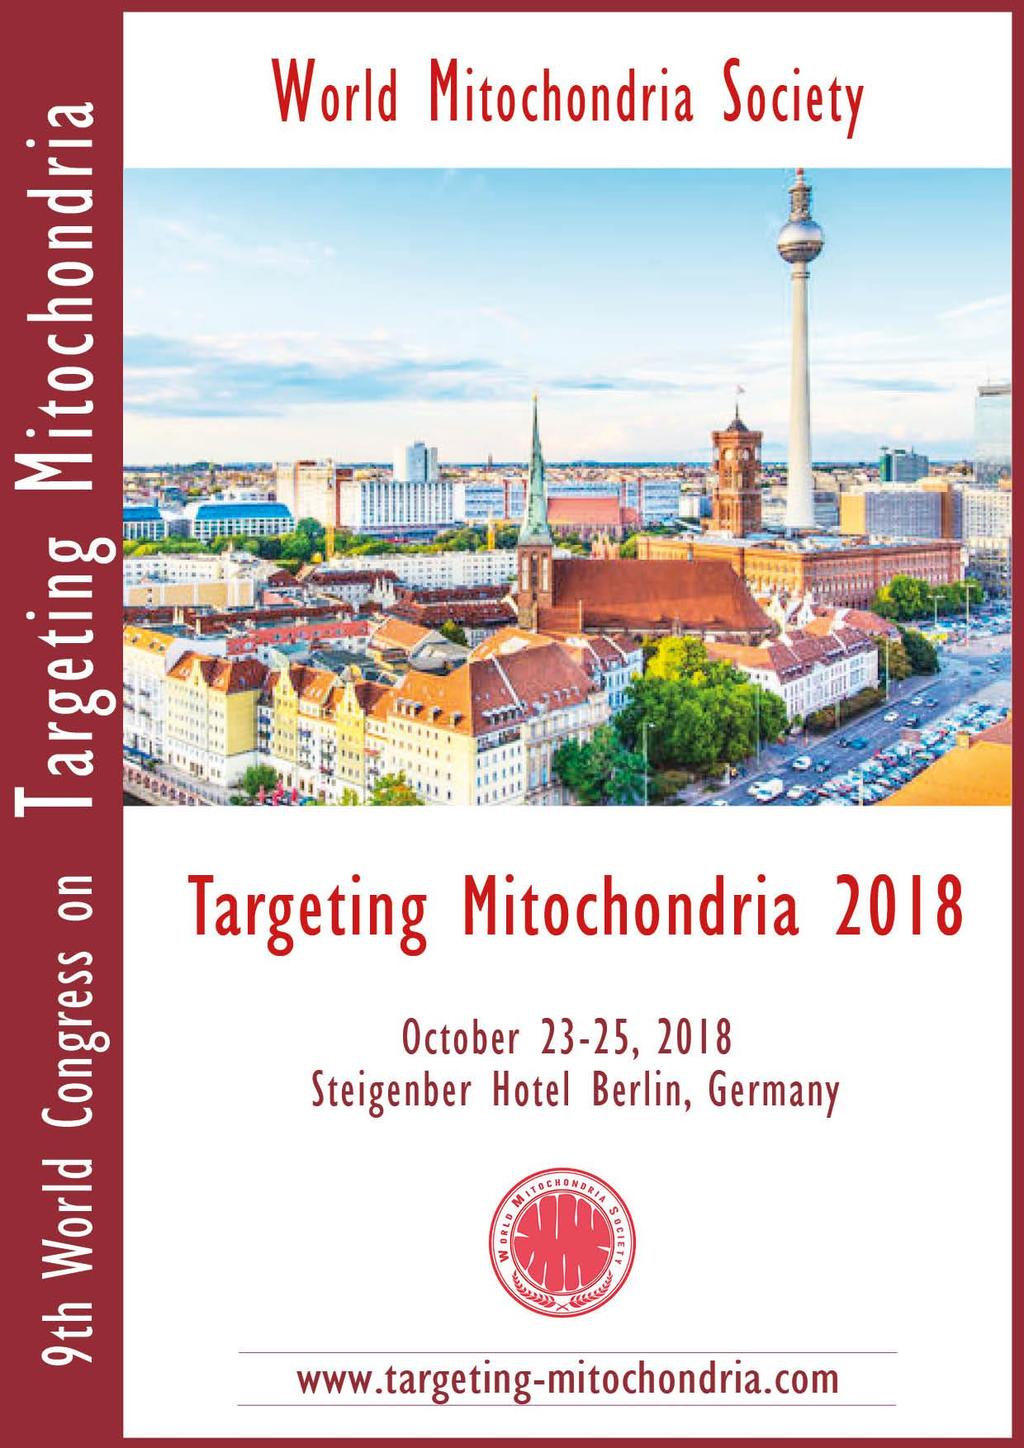 Targeting Mitochondria World